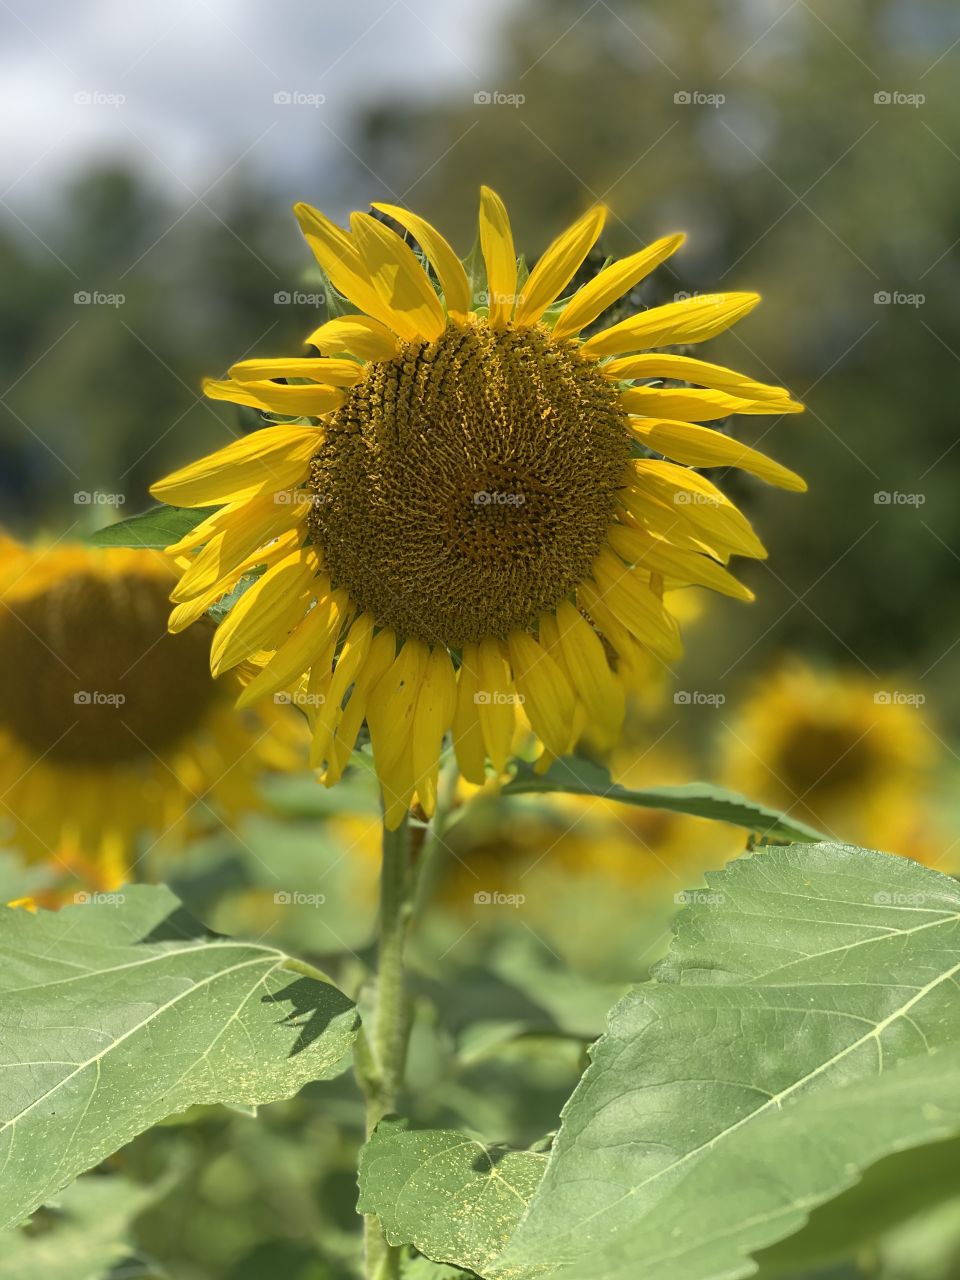 Sunny Sunflowers 